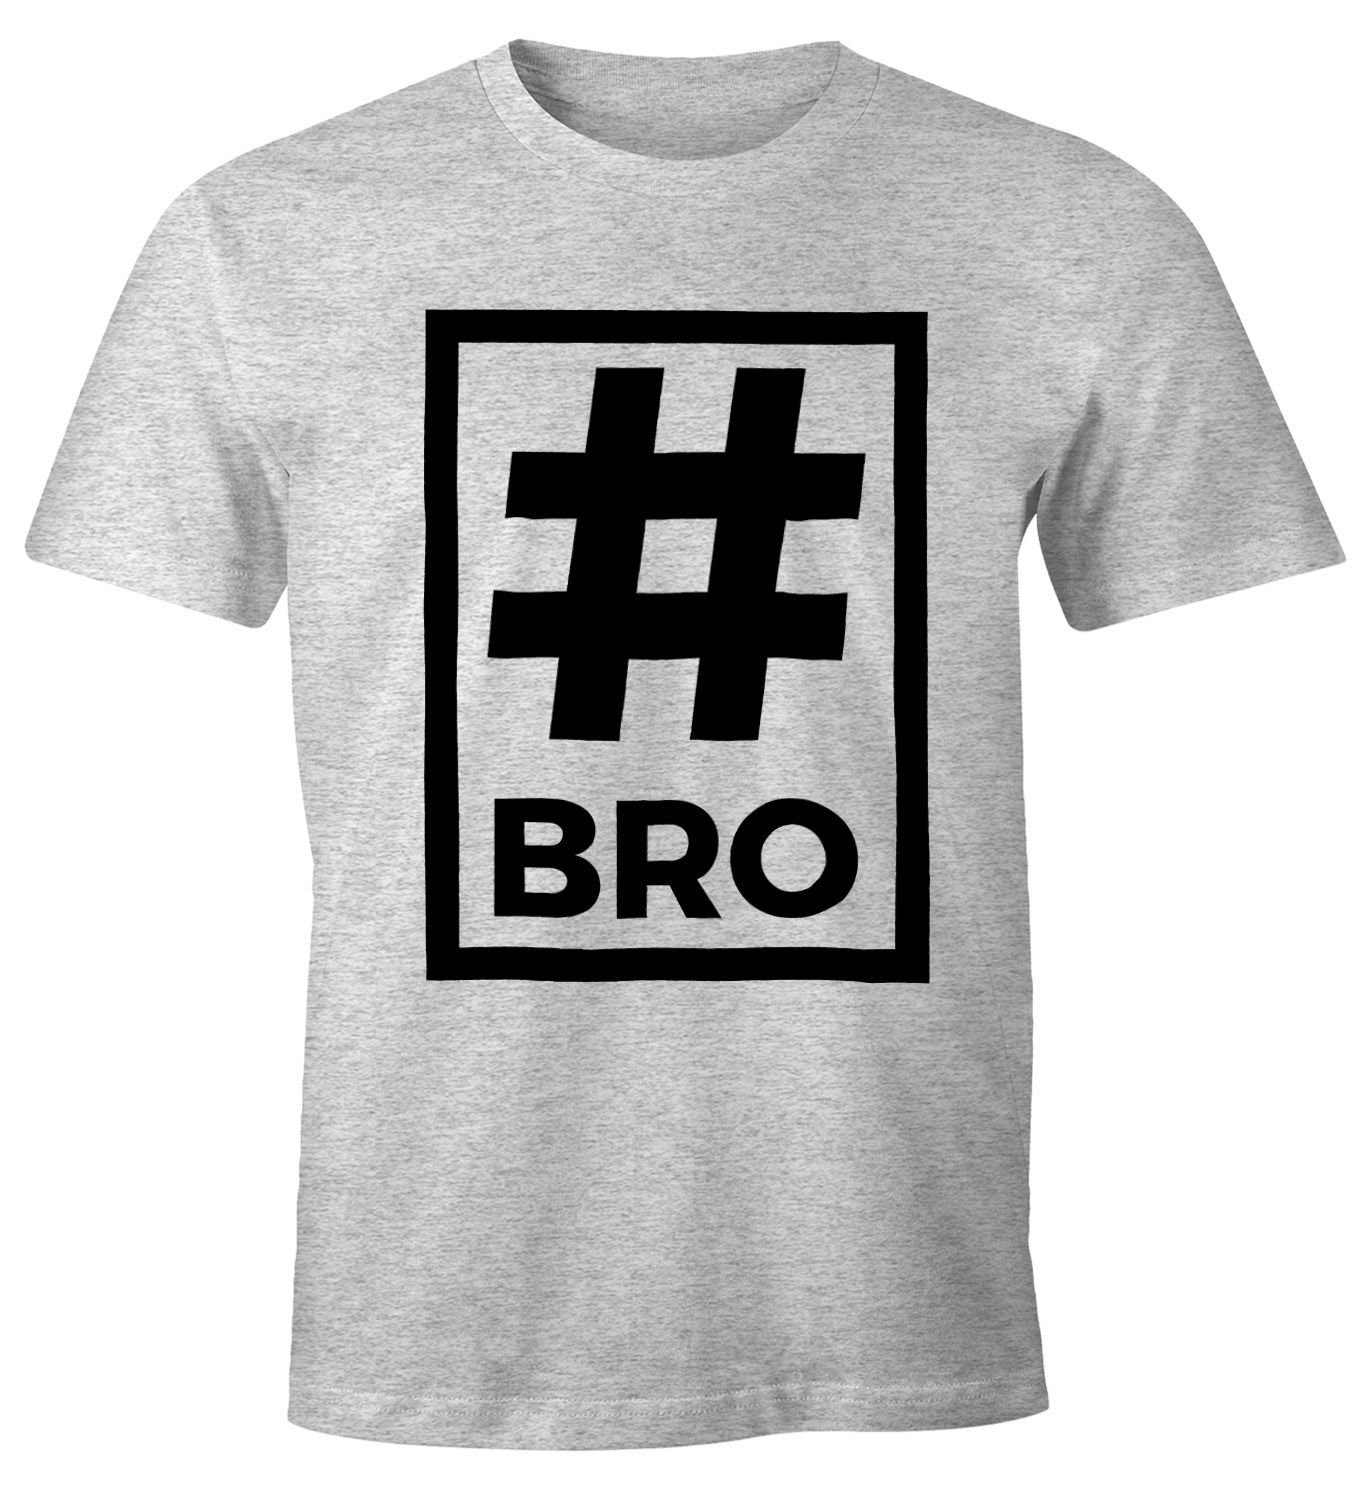 Print Moonworks® Brother grau Hashtag MoonWorks Herren T-Shirt mit Bro Print-Shirt